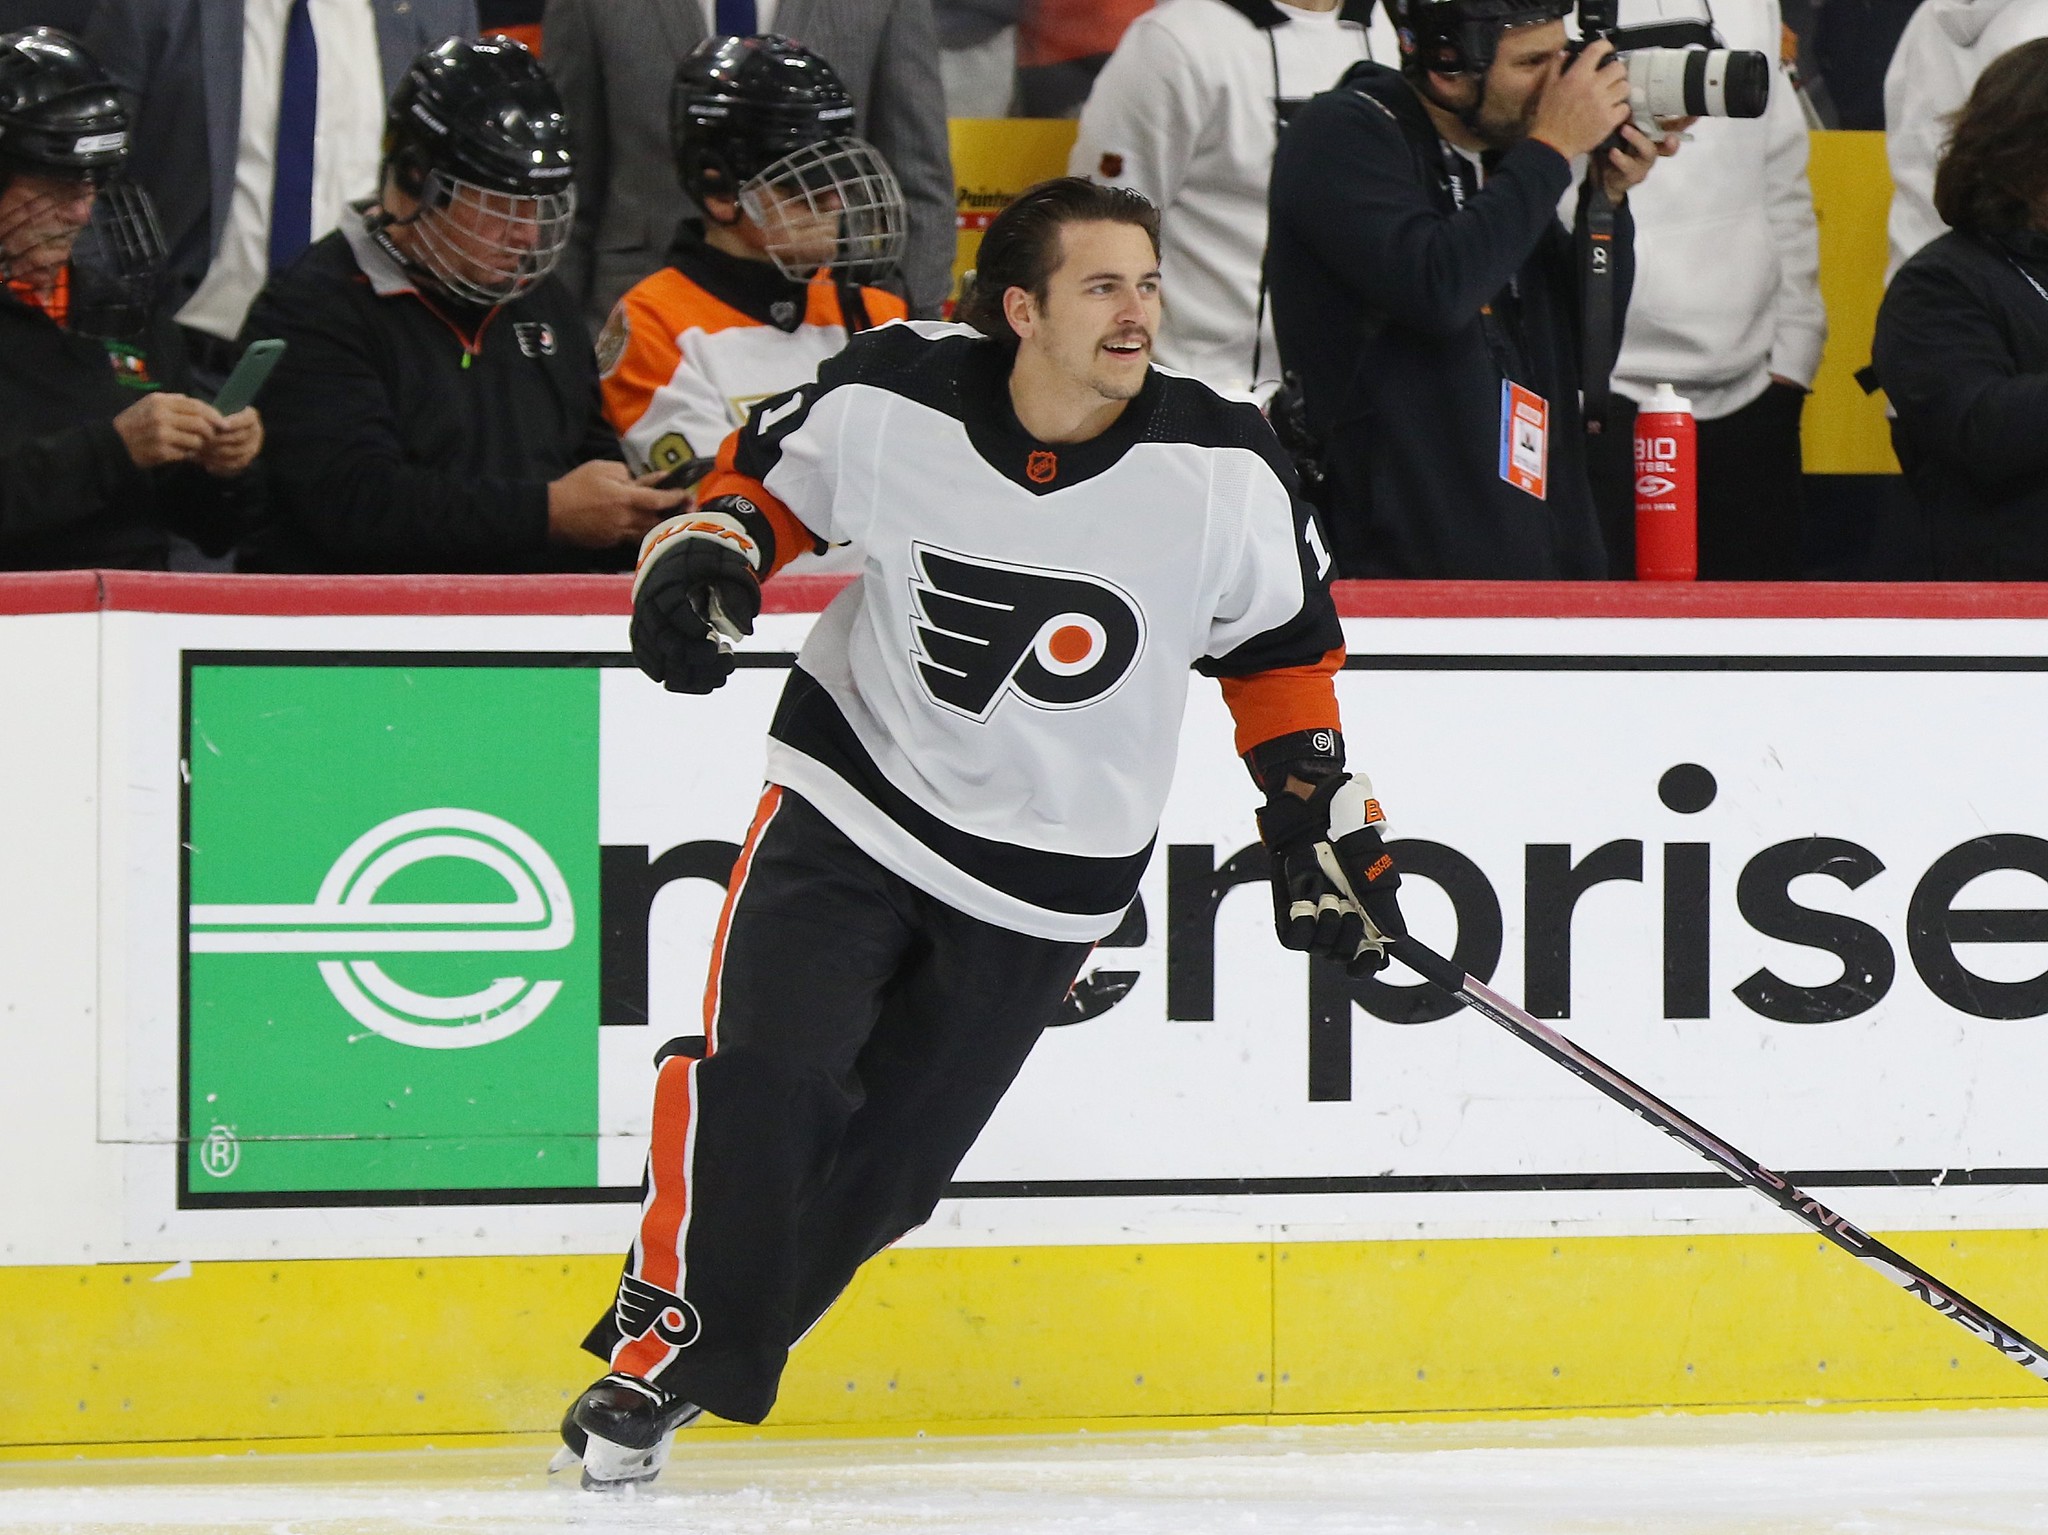 Travis Konecny Philadelphia Flyers